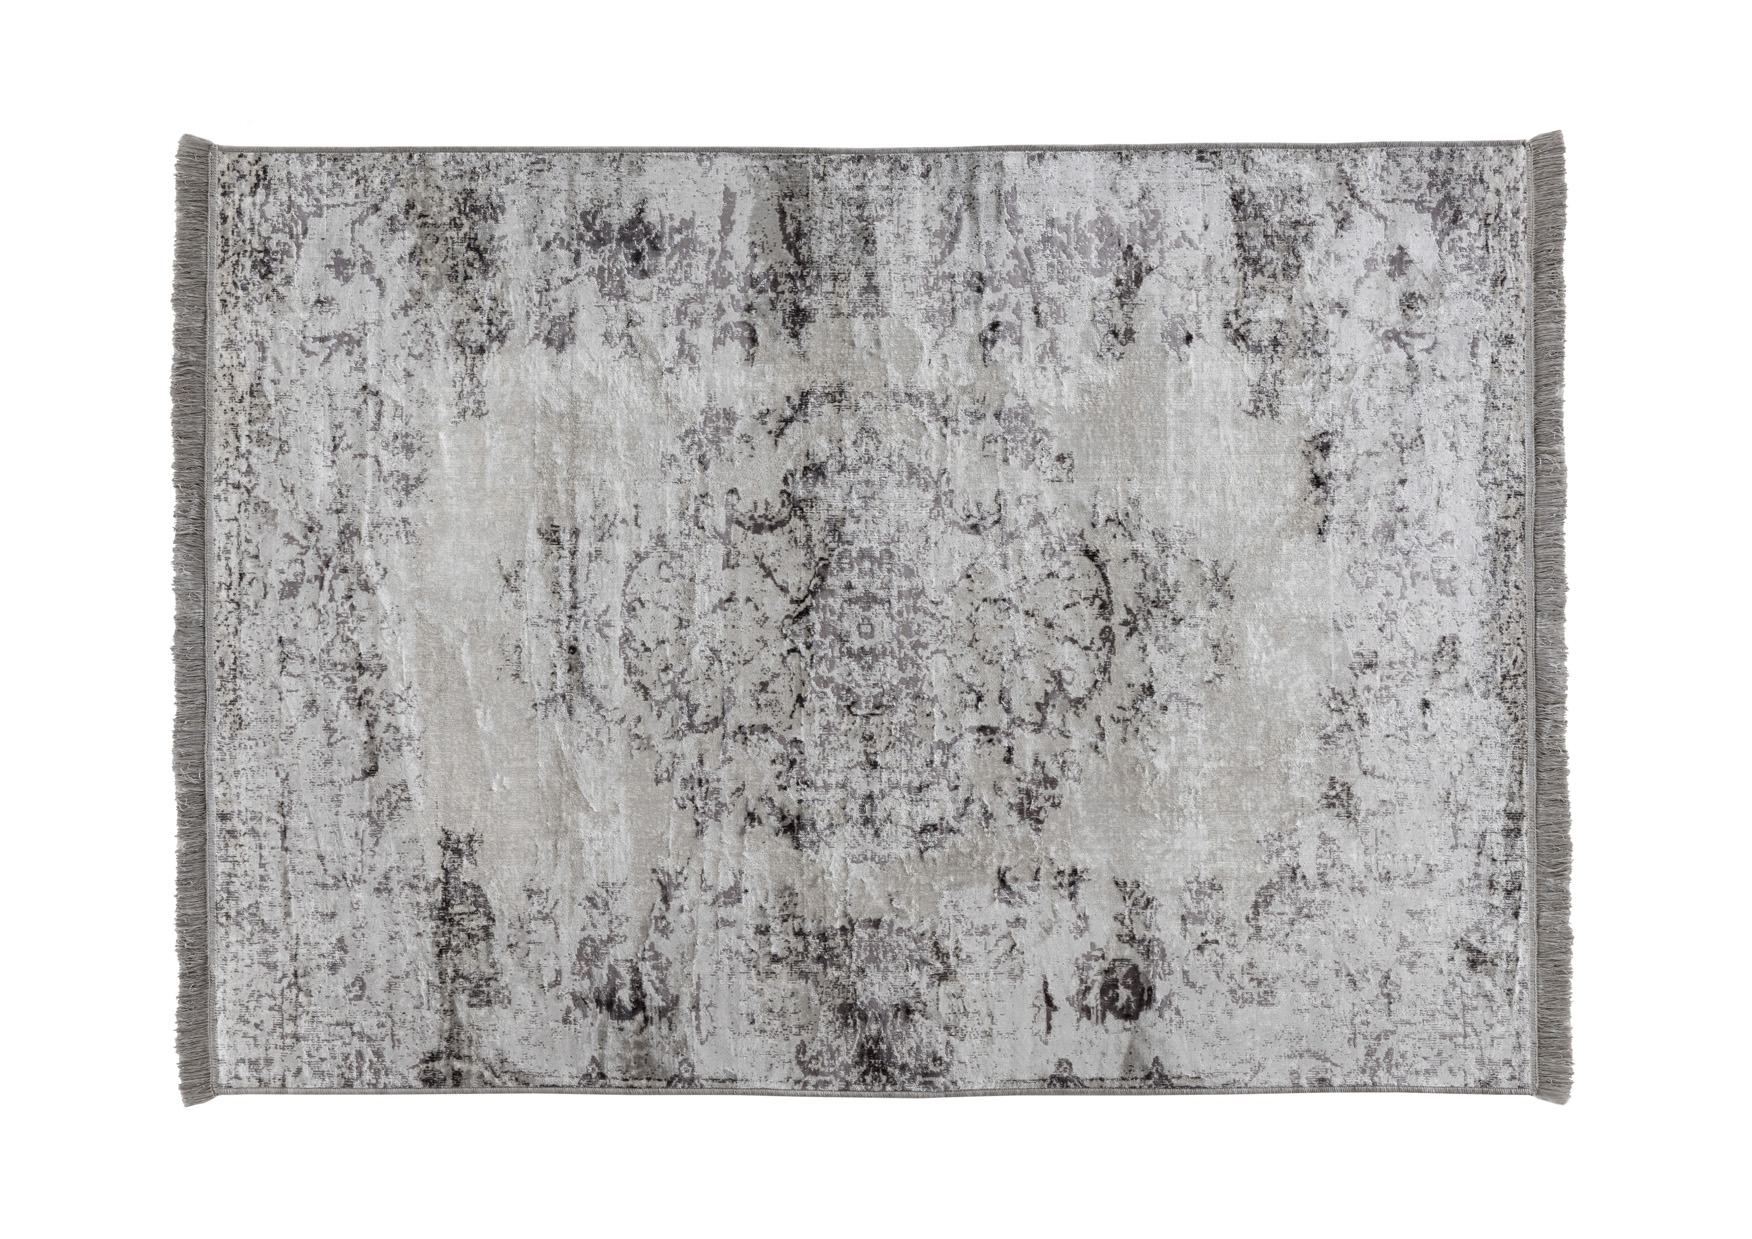 Vintage-Teppich VAN DYCK, 200 x 300 cm | grau | traditionelle Ornamente | Used-Look